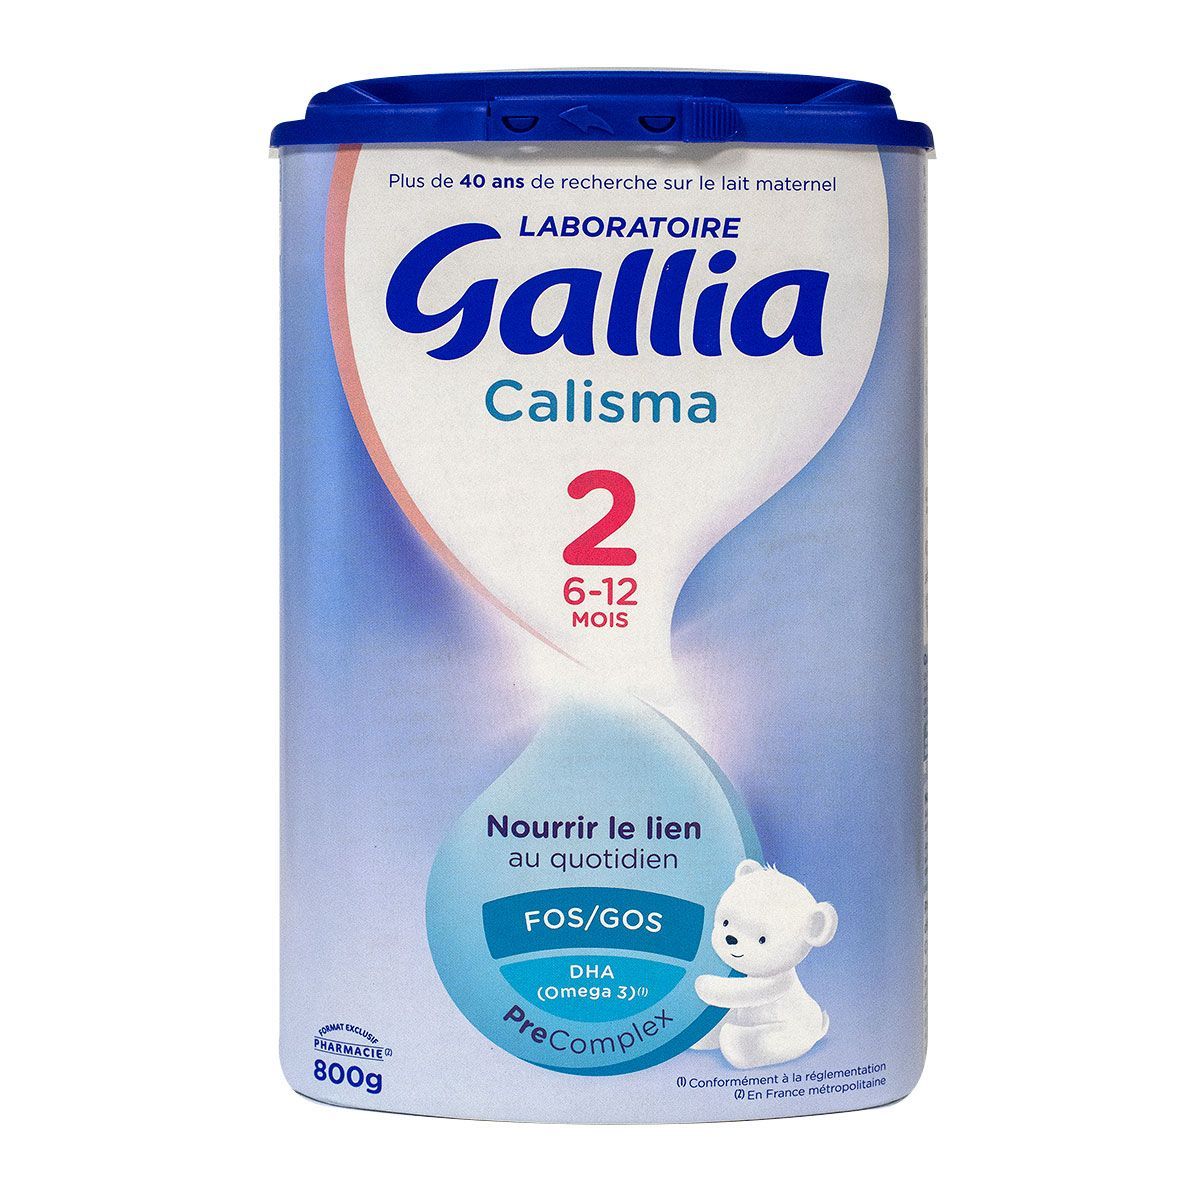 Gallia Calisma 2 6-12 mois 800g